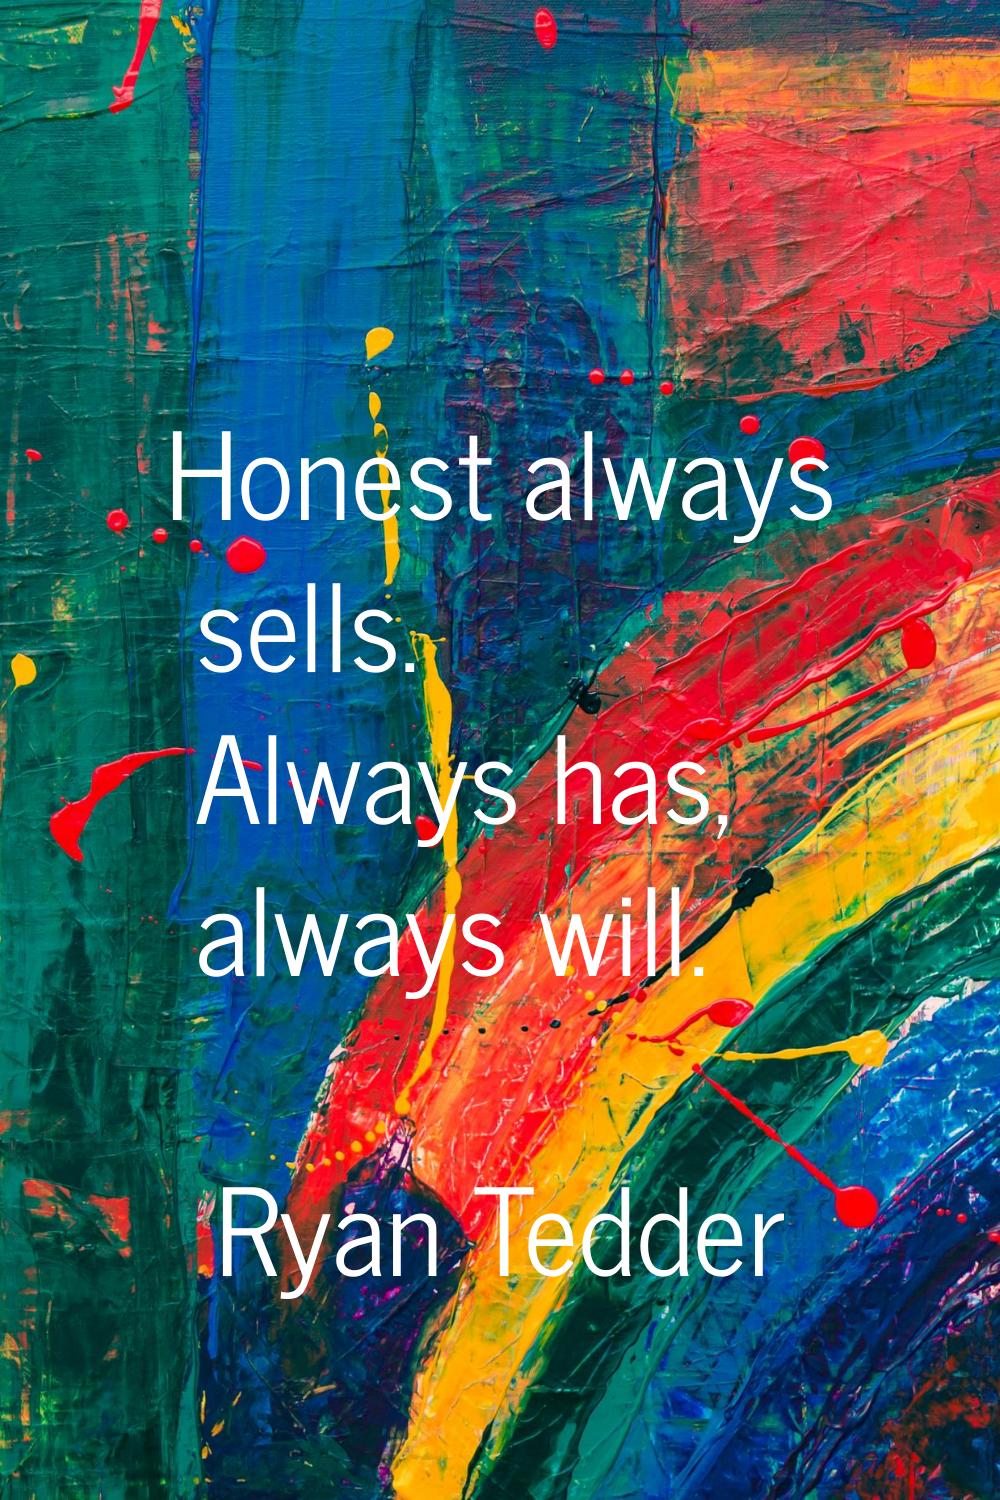 Honest always sells. Always has, always will.